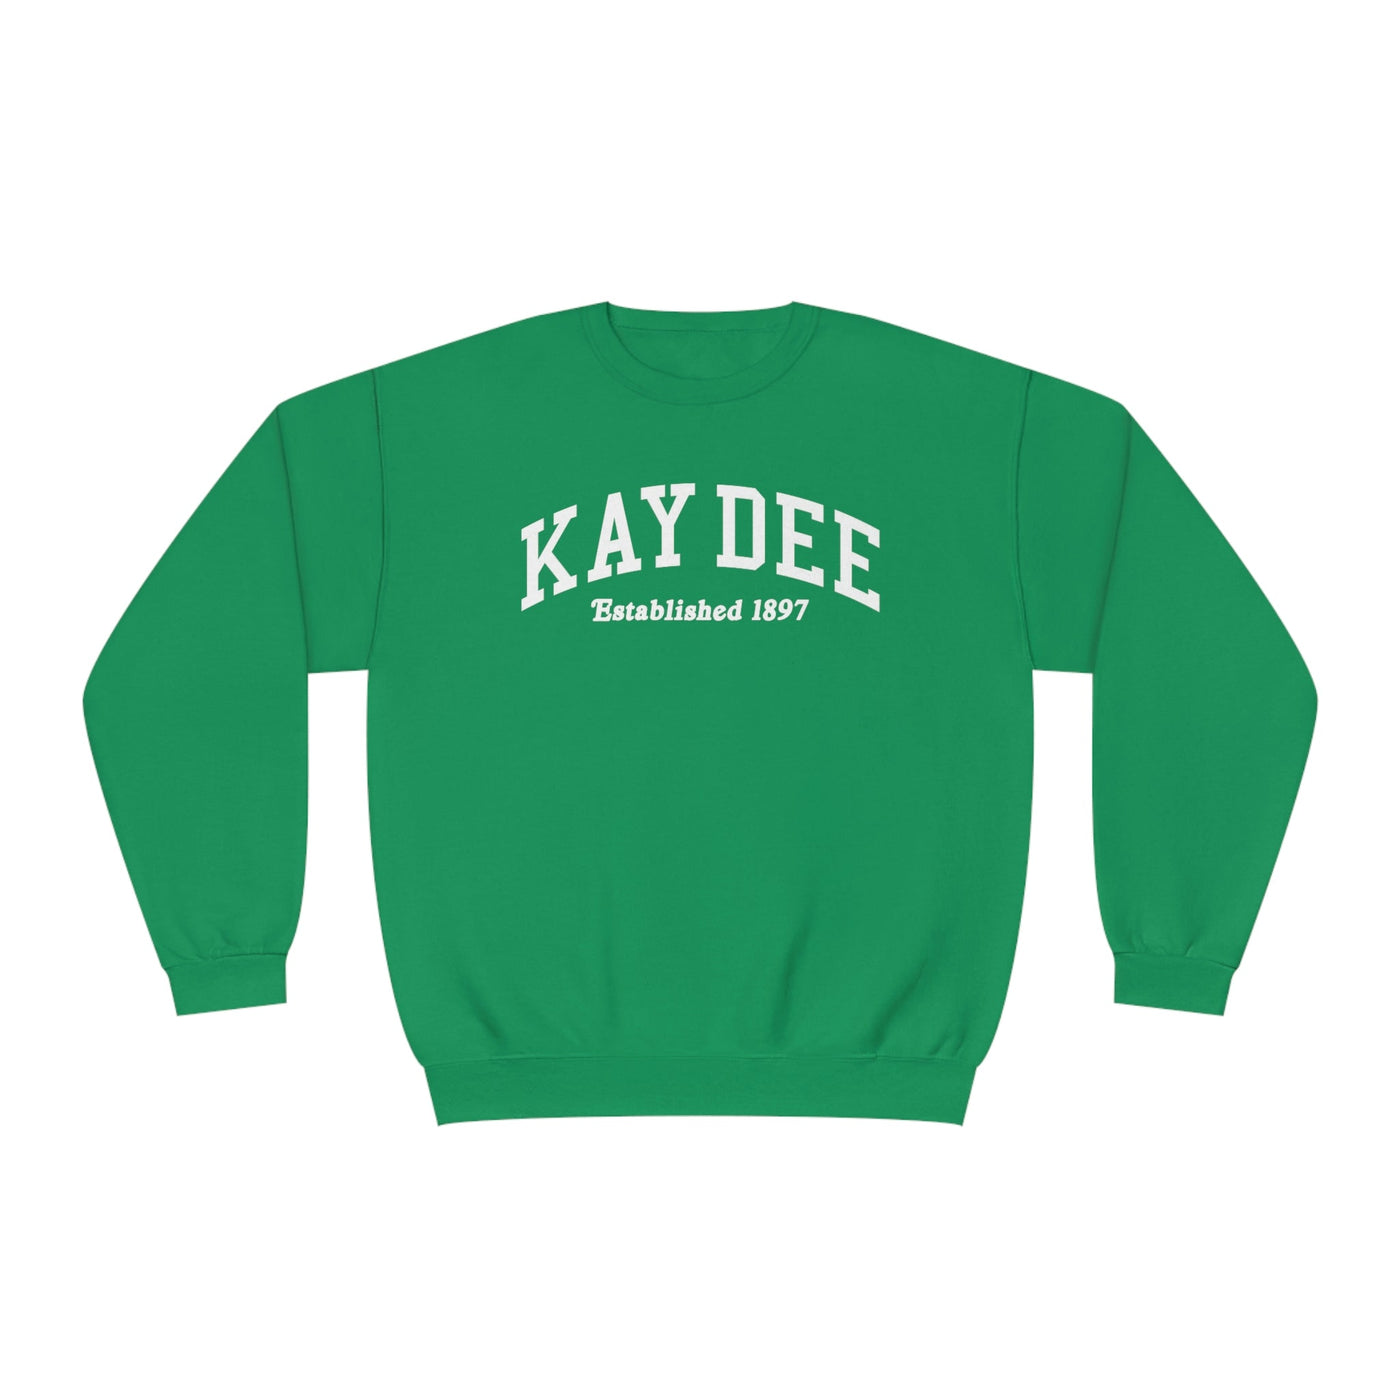 Kappa Delta Sorority Varsity College Kay Dee Crewneck Sweatshirt